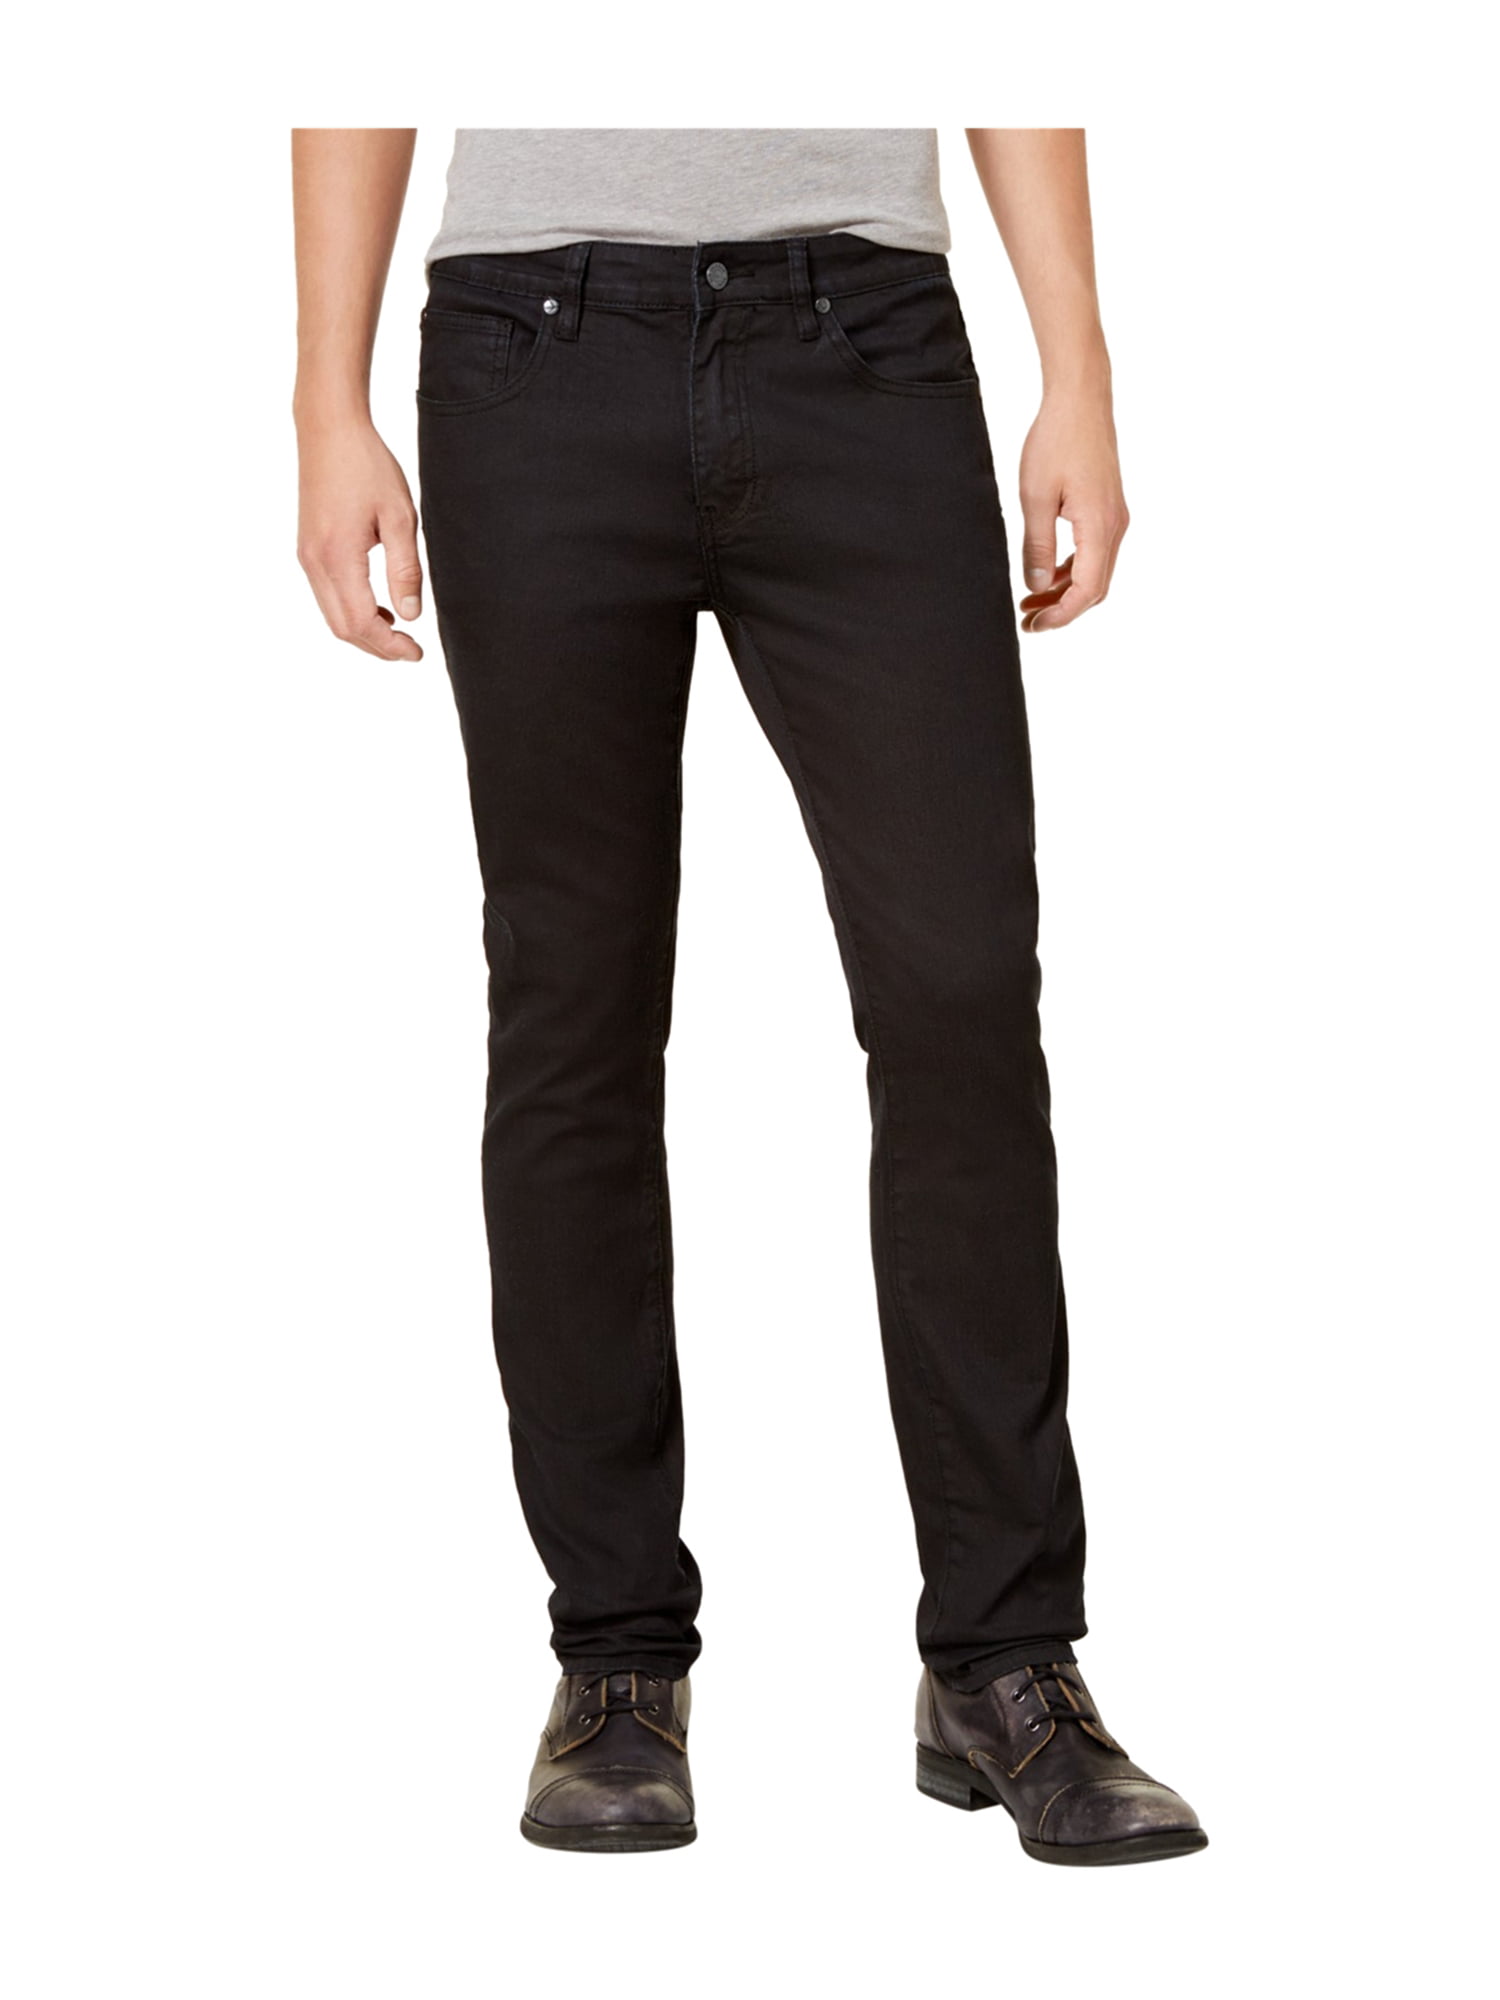 Ben Sherman Mens Stretch Slim Fit Jeans dkbluewash 29x32 | Walmart Canada